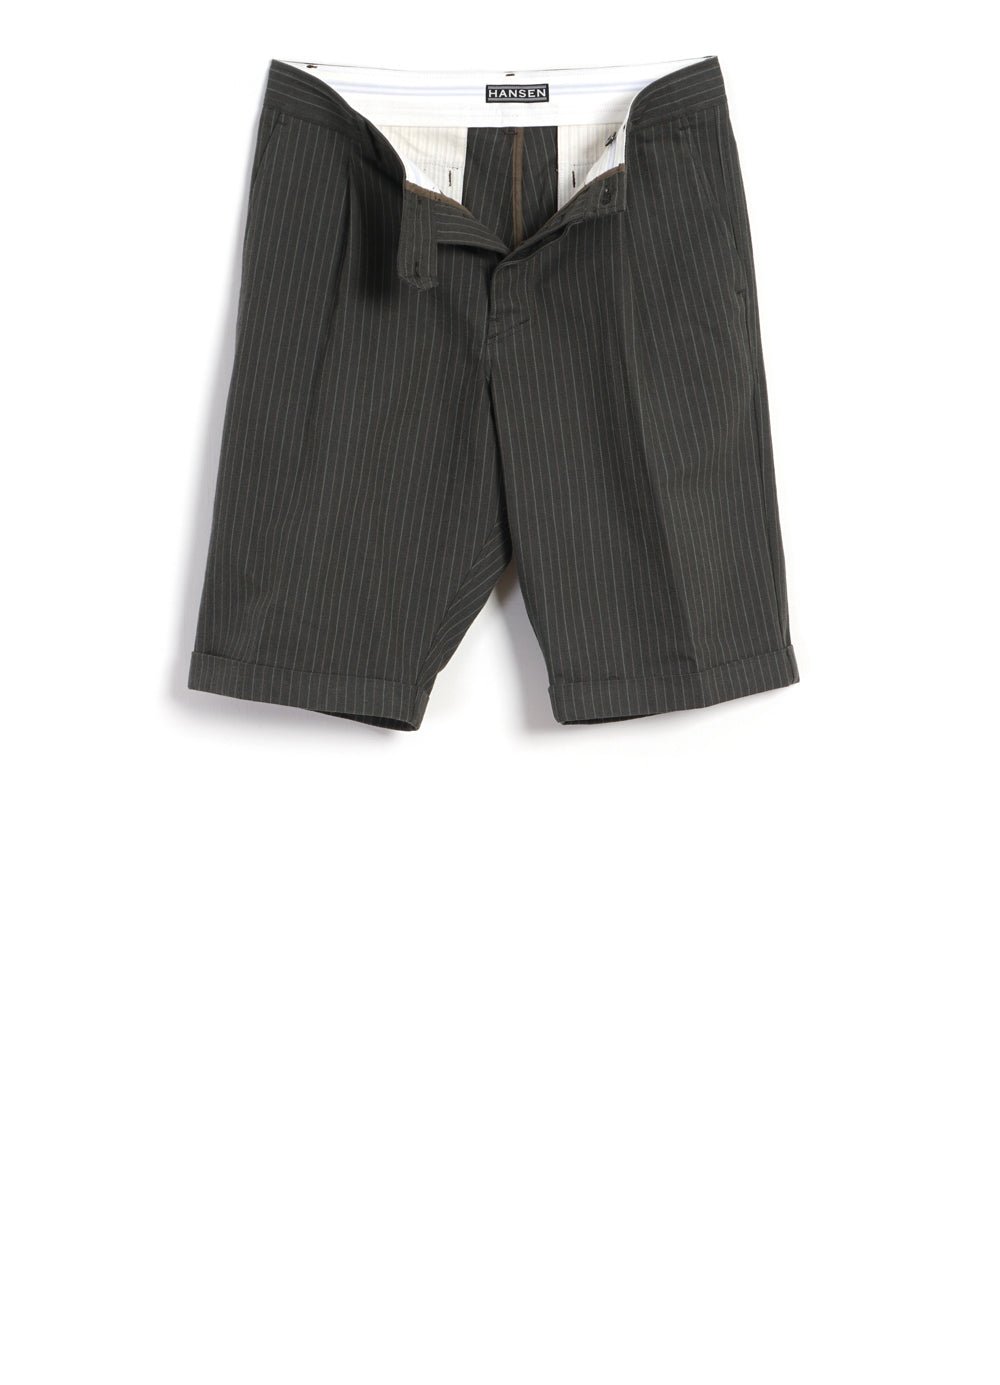 HANSEN GARMENTS - BIRK | Single Pleated Shorts | Khaki Pin - HANSEN Garments